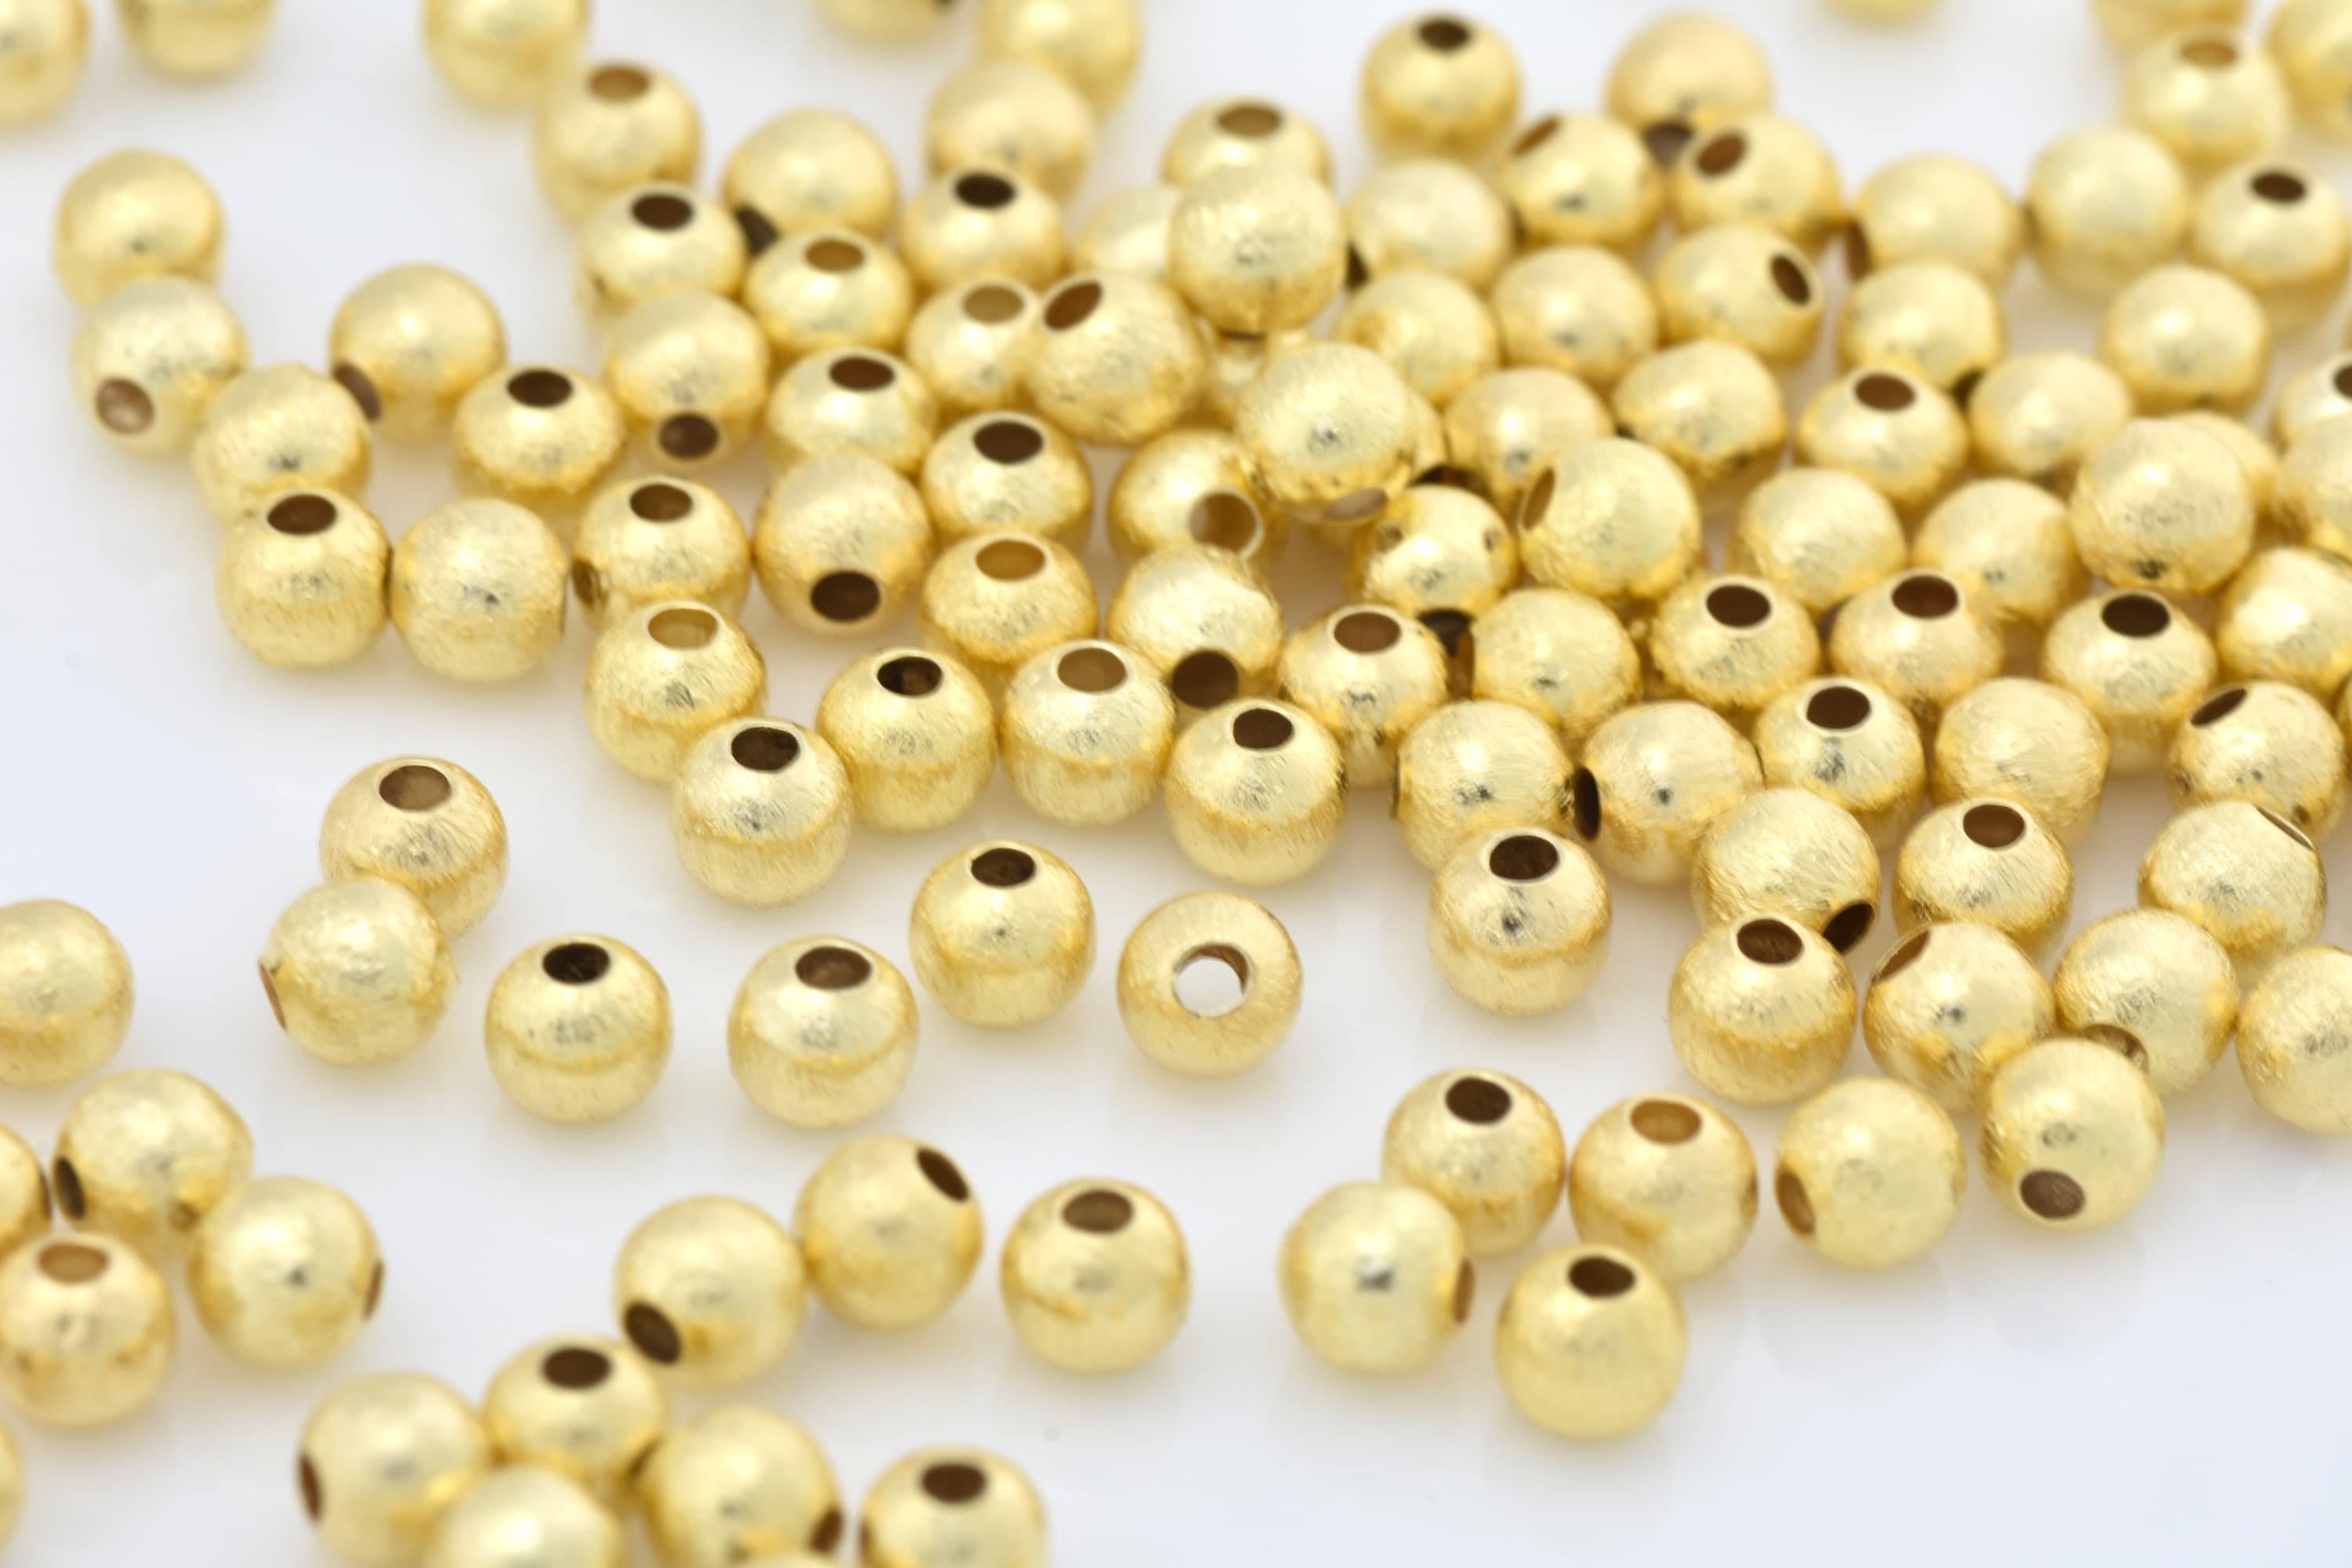 Round Ring Beads | Big Hole Spacer Bead | Gold Dreadlock Beads | Slider Bead | European Charm Bracelet Making (10pcs / Antique Gold / 8mm x 4mm)